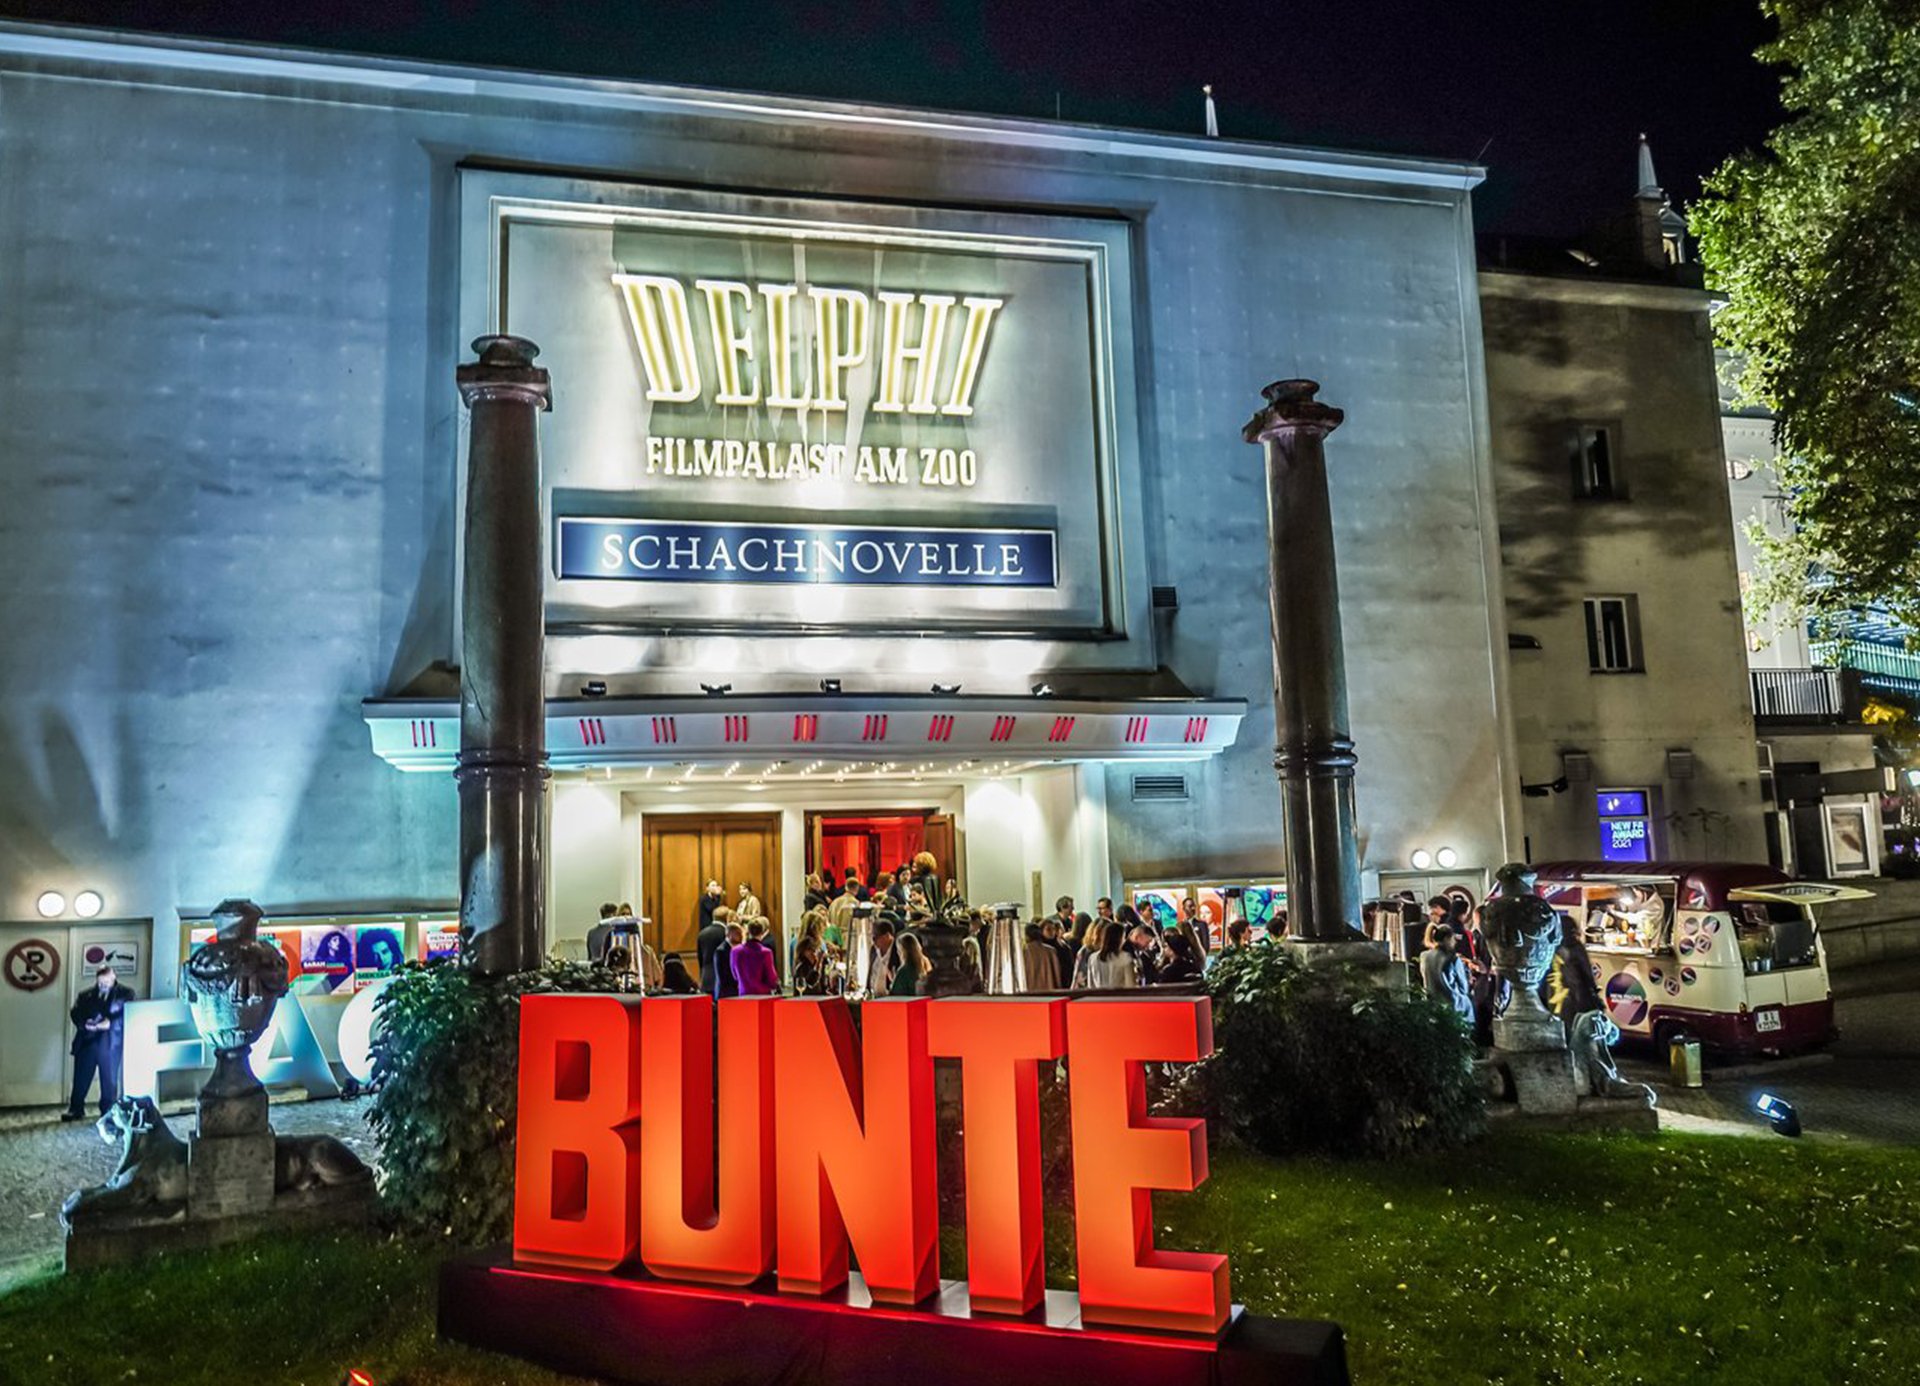 BUNTE-Event in Berlin